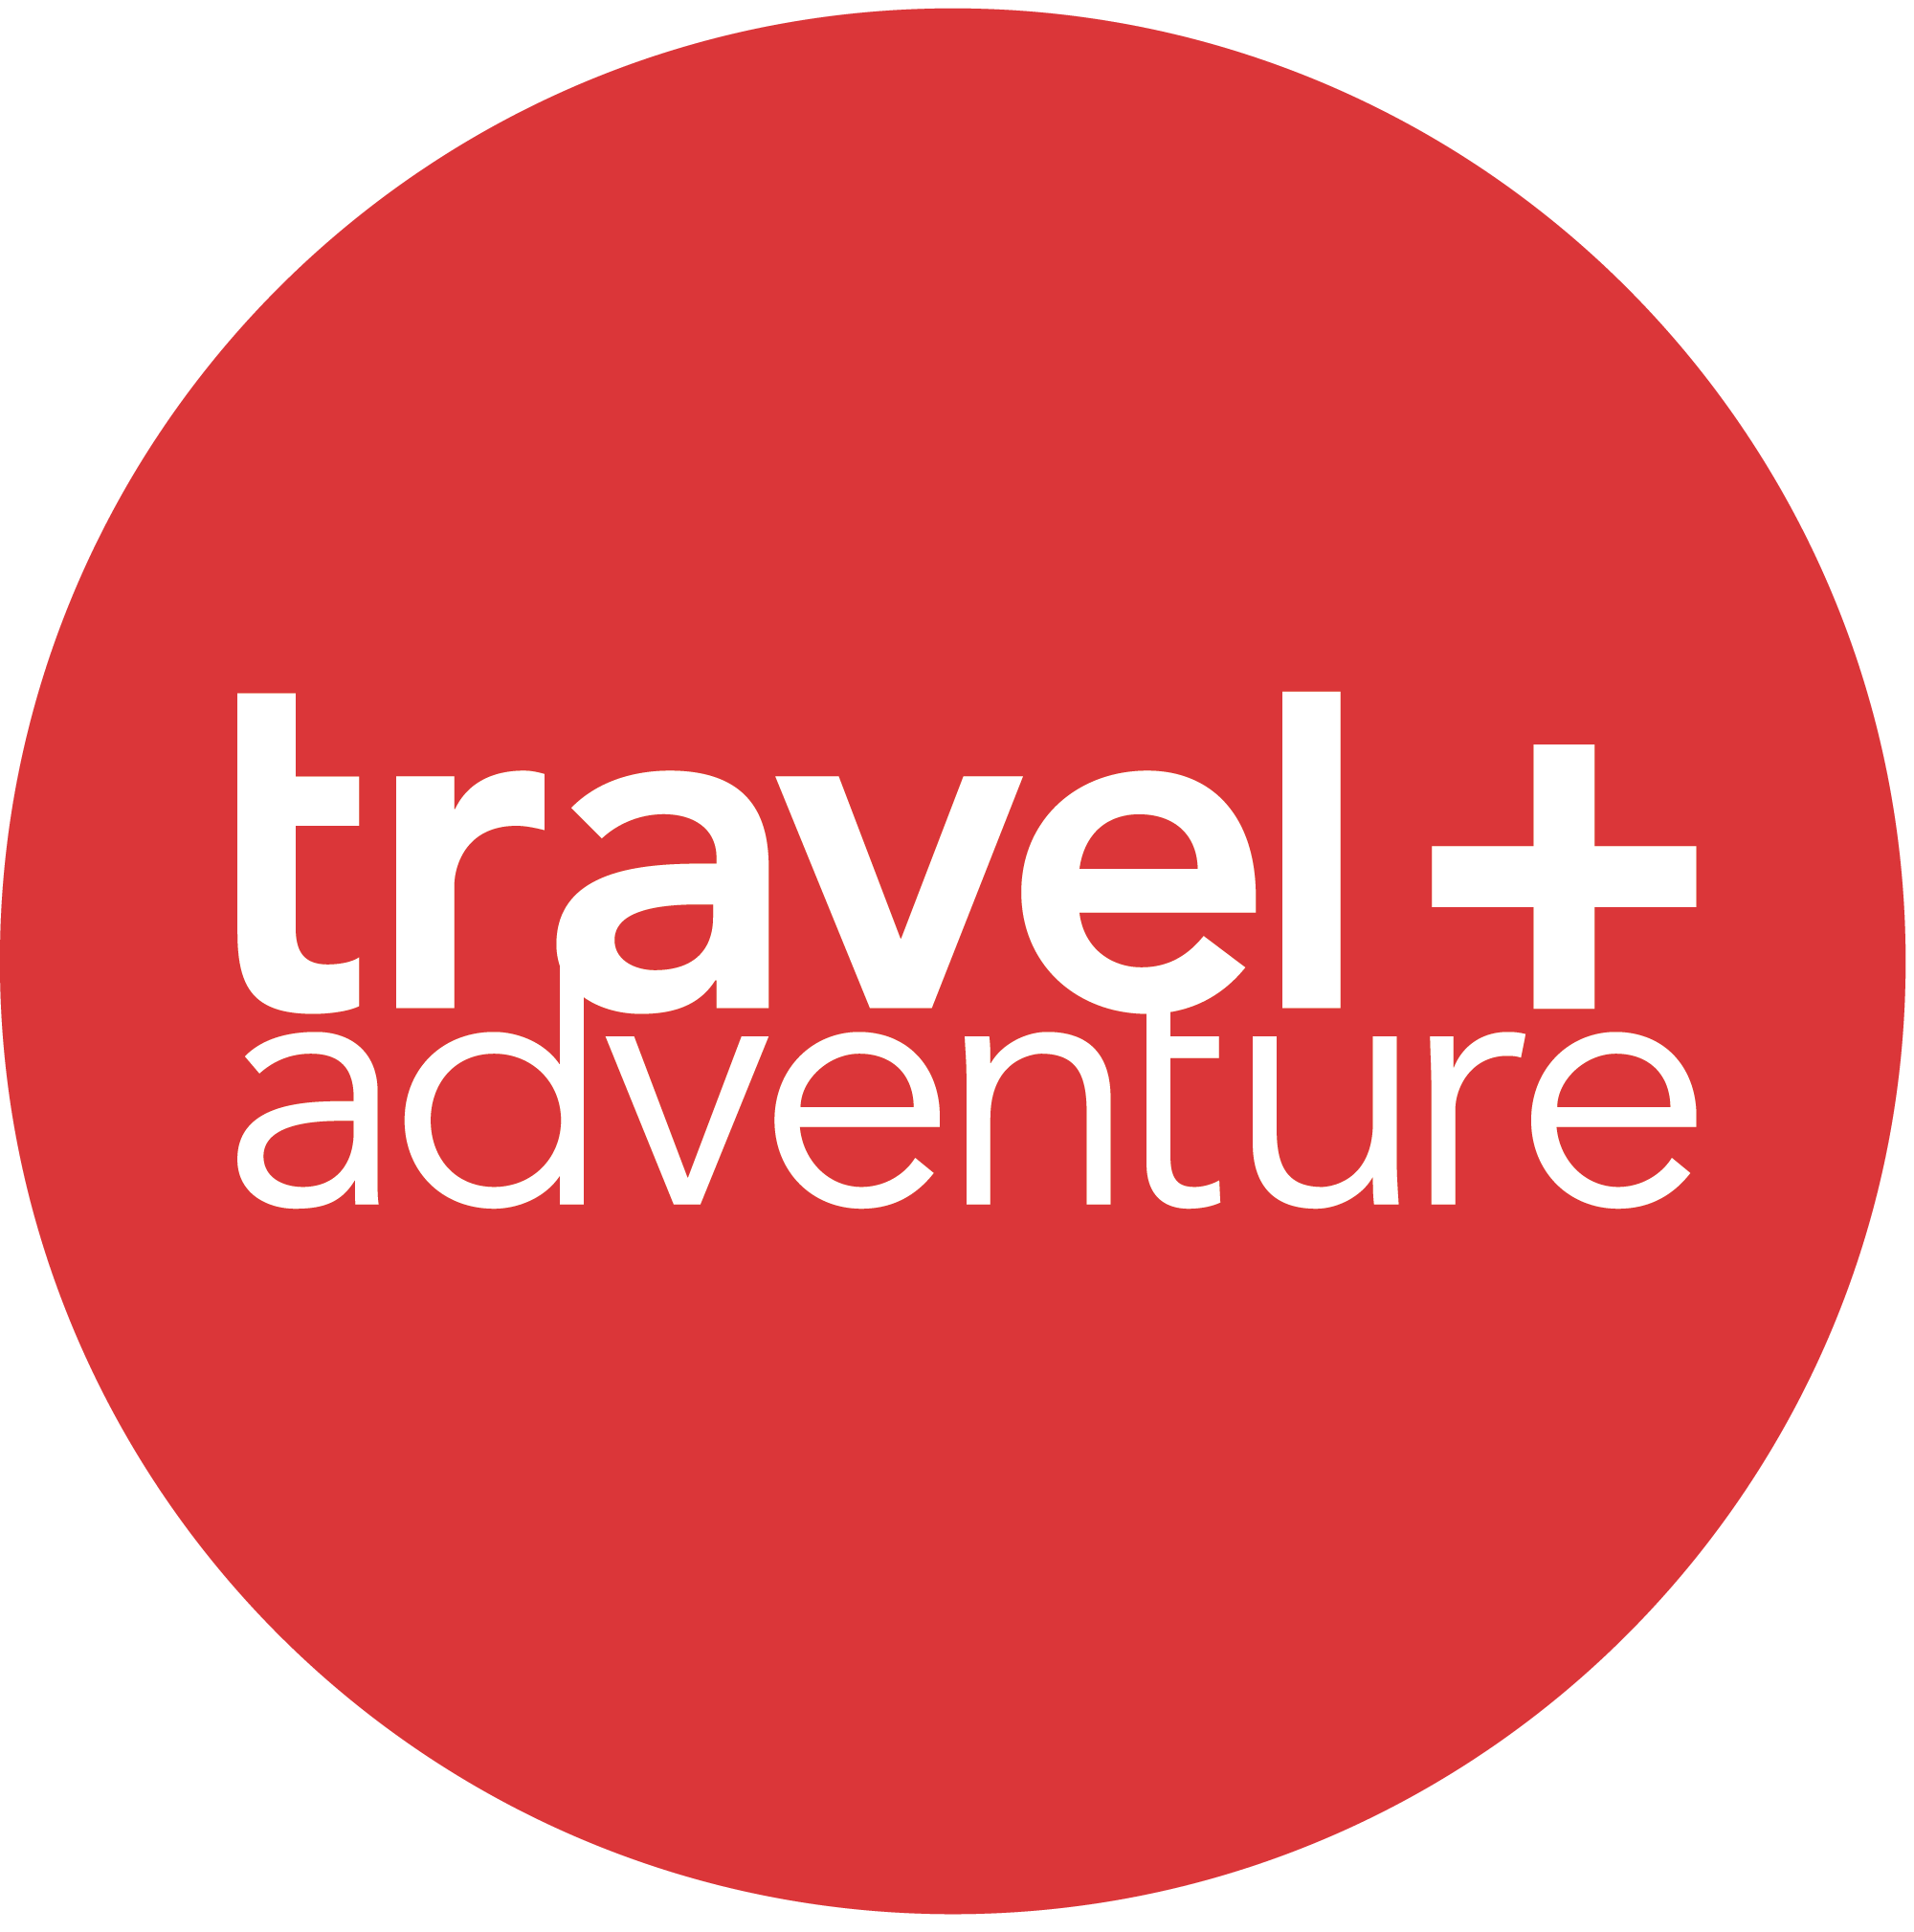 Travel+ Adventure